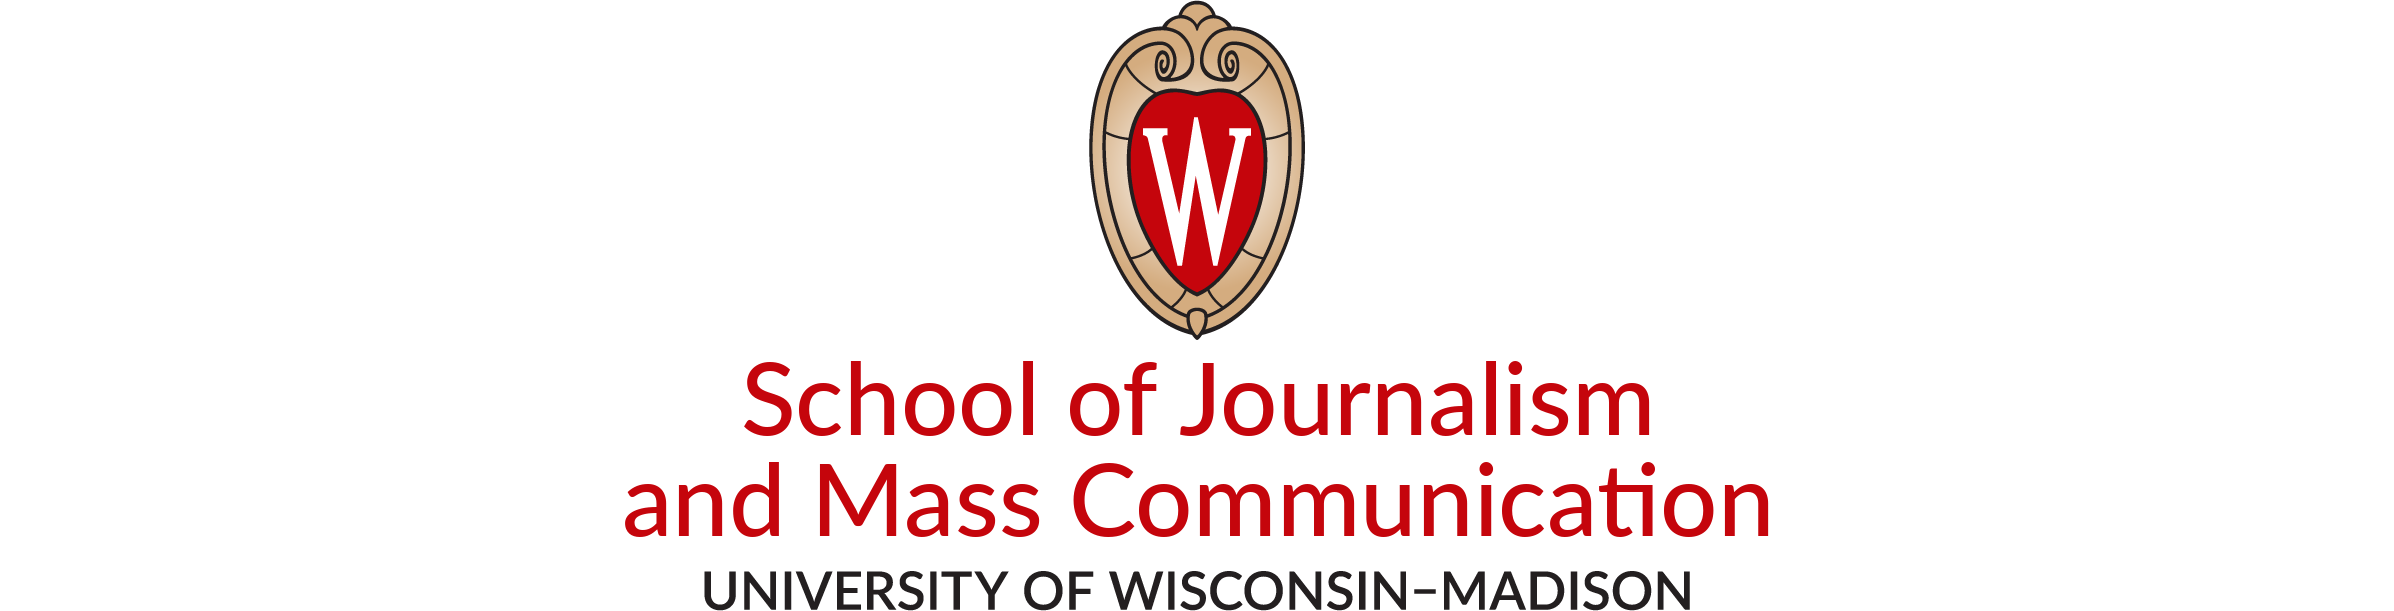 University of Wisconsin-Madison School of Journalism and Mass Communication logo